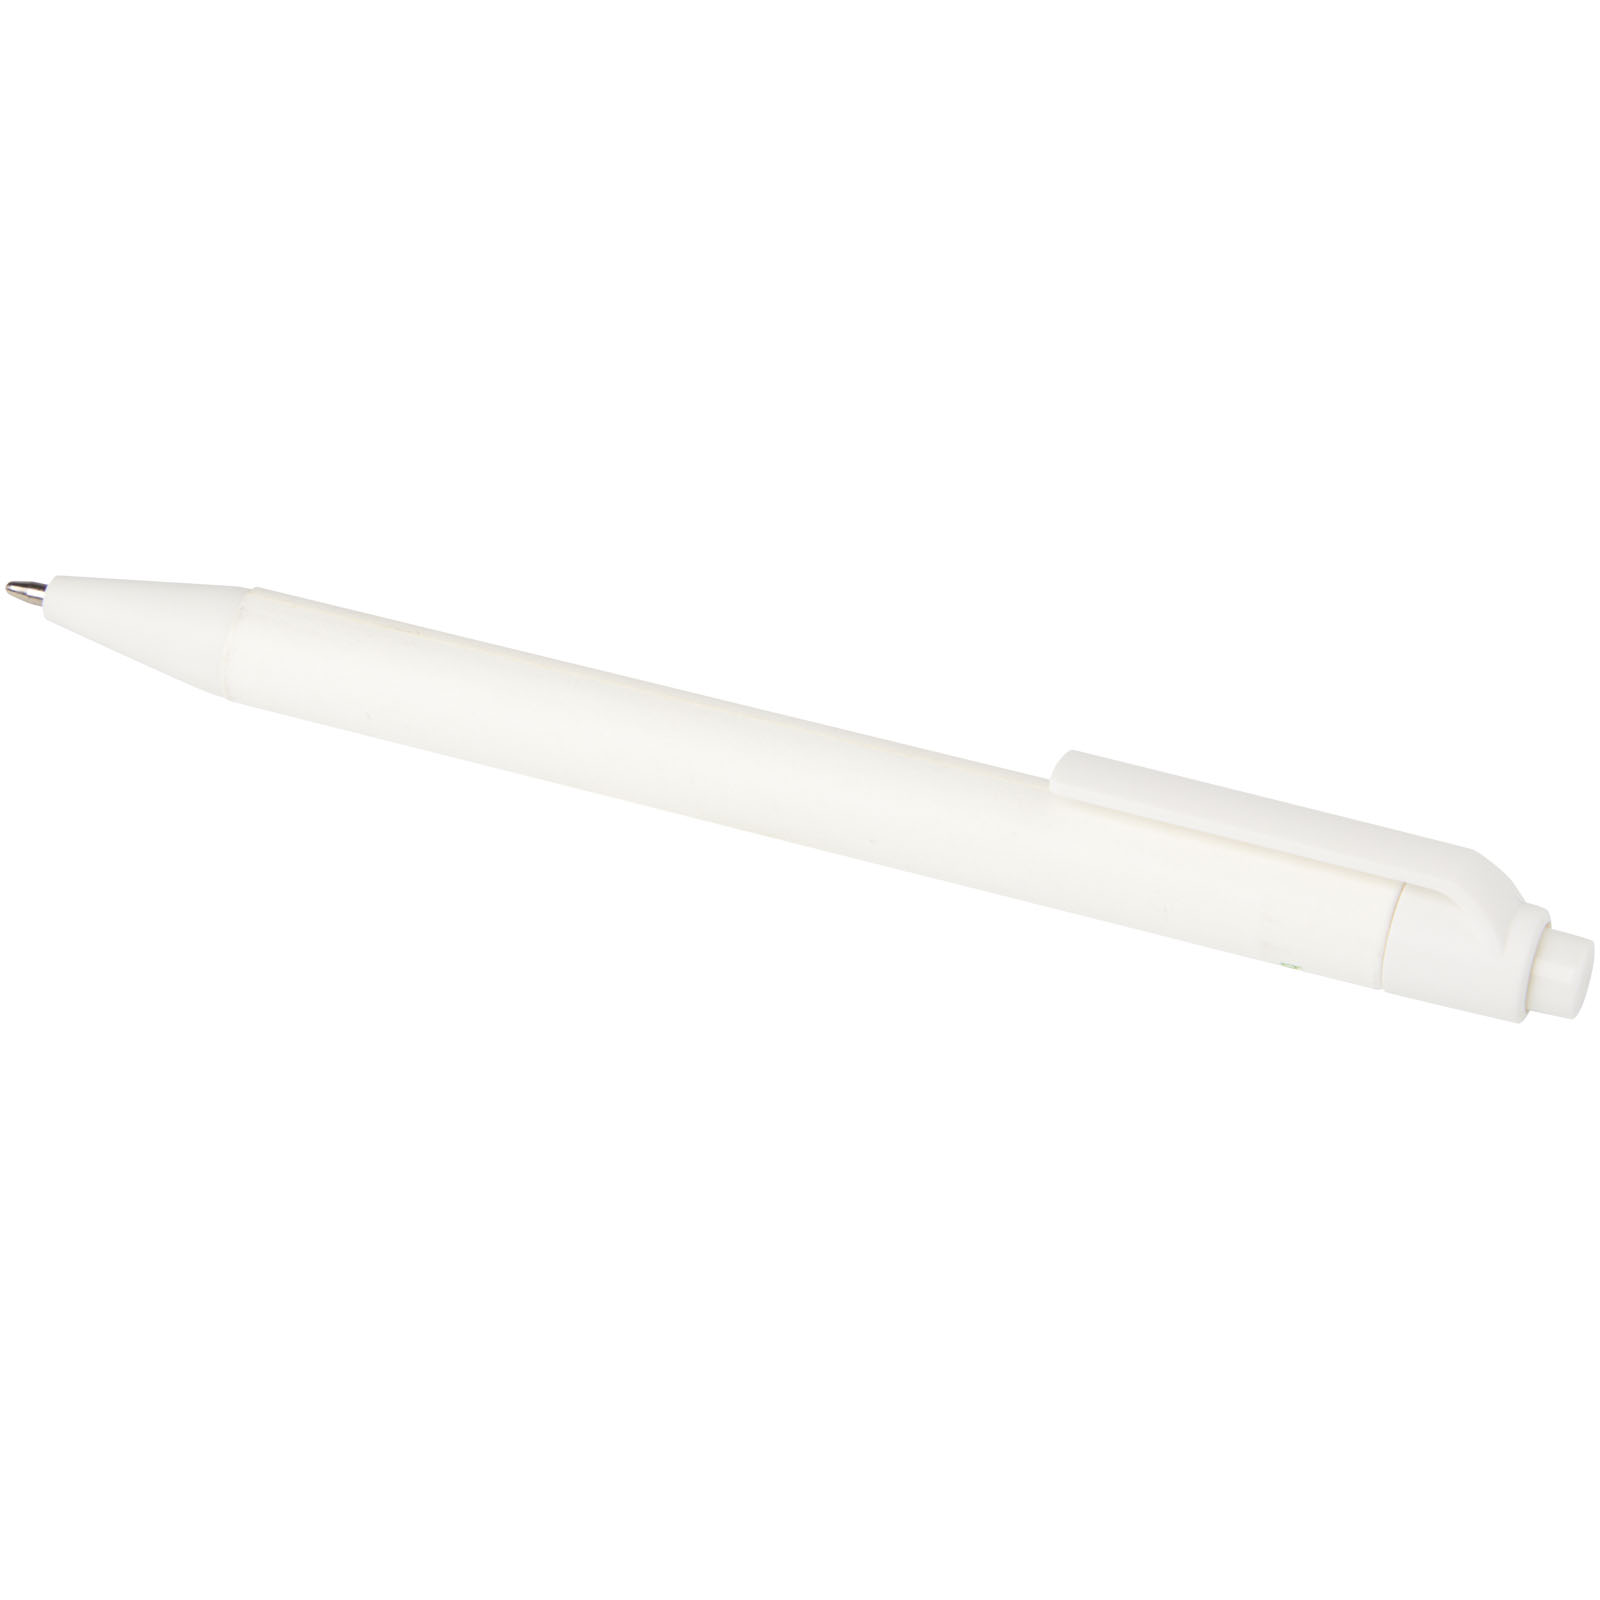 Advertising Ballpoint Pens - Chartik monochromatic recycled paper ballpoint pen with matte finish - 2